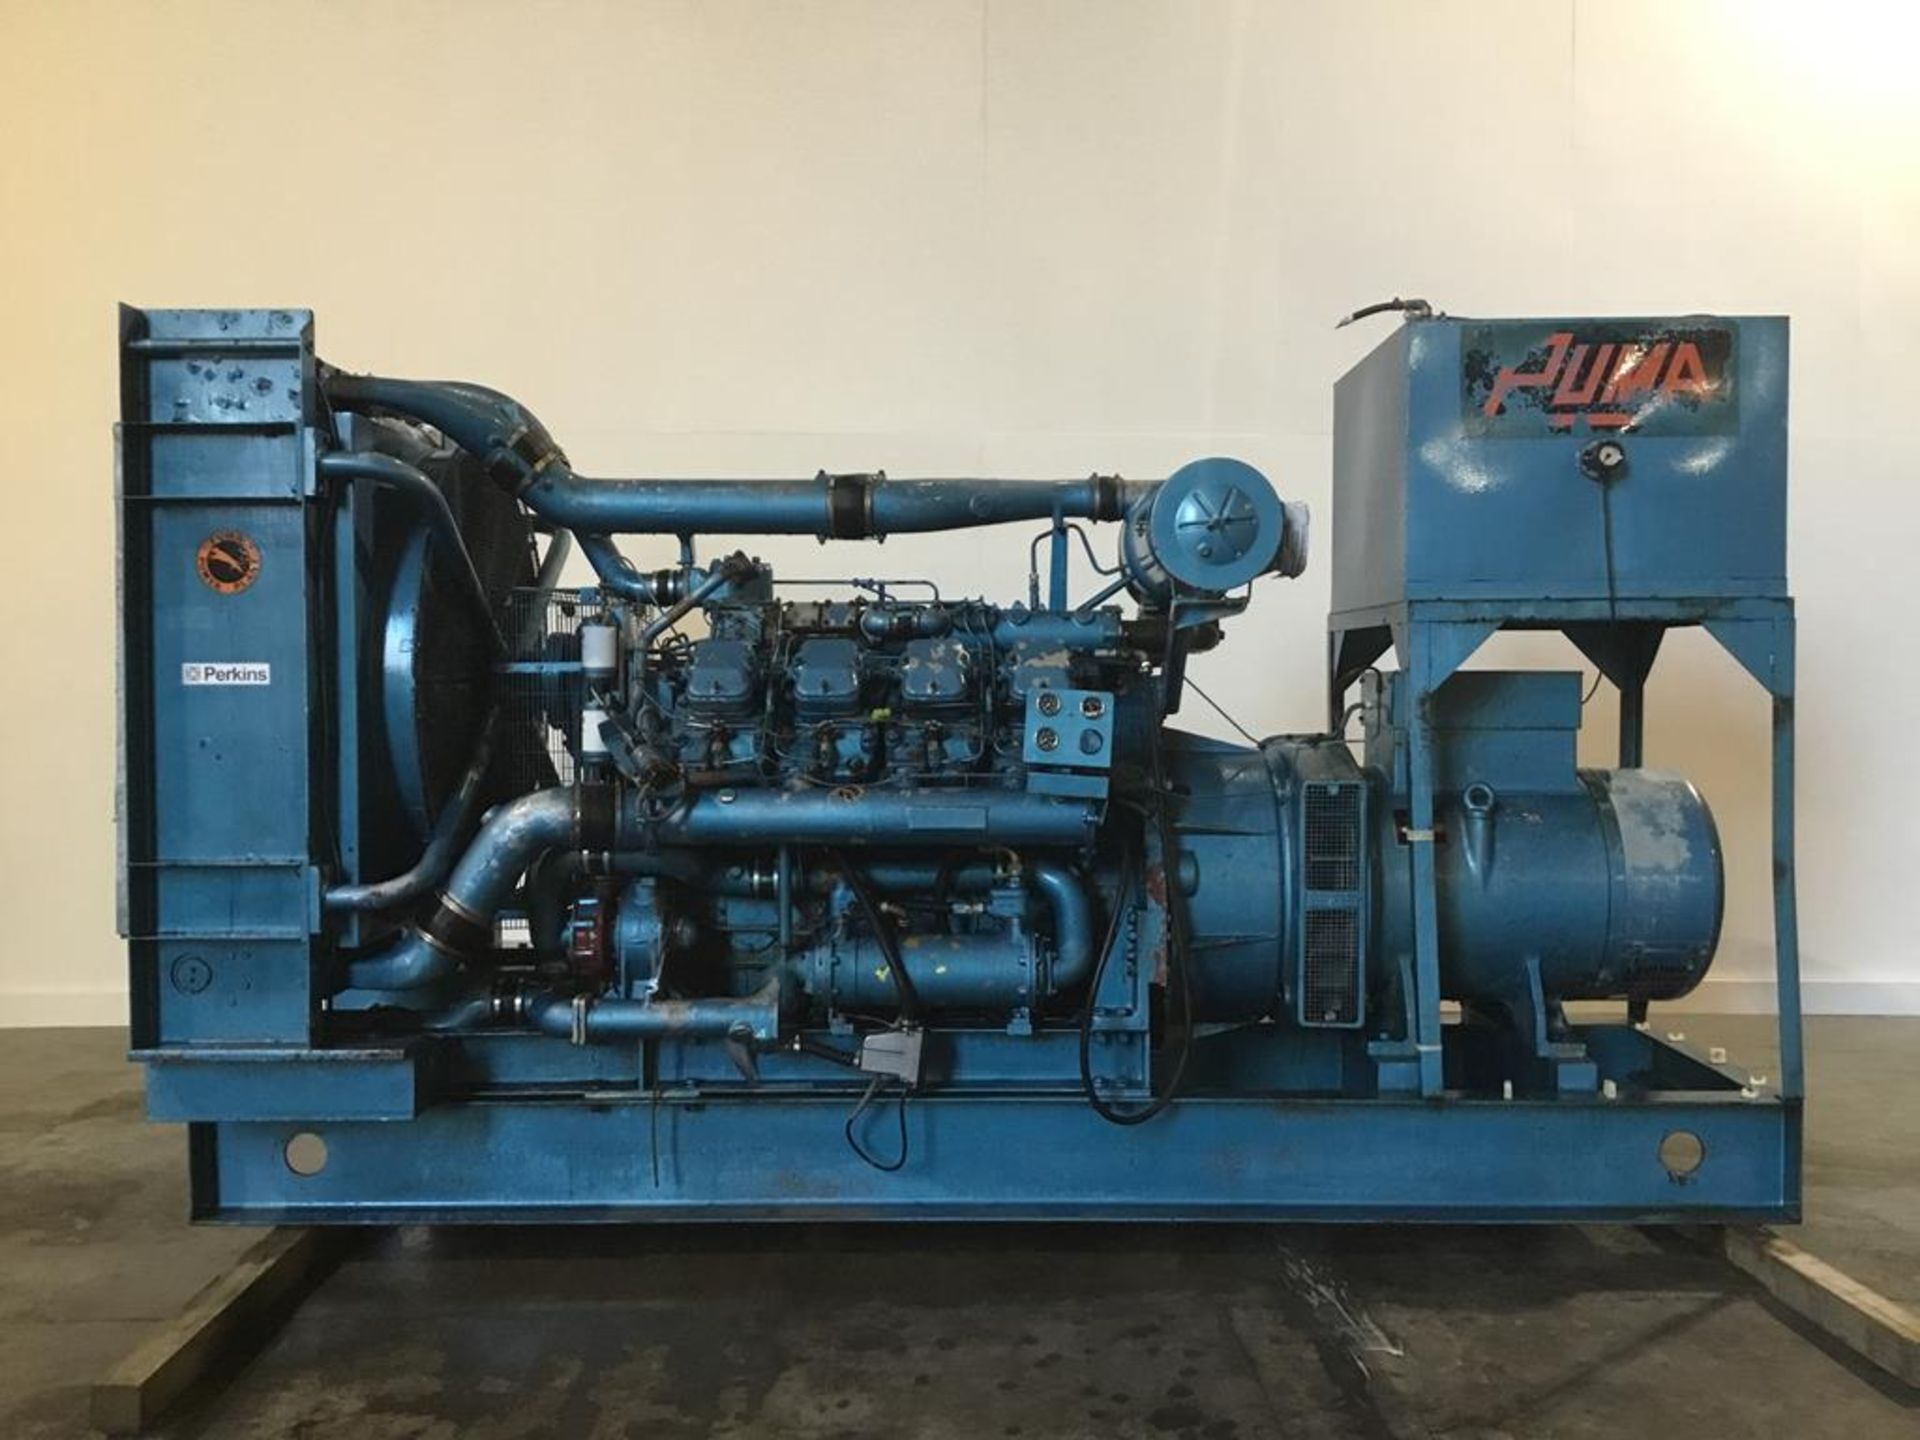 Dorman 395kva Diesel Generator - Image 2 of 11